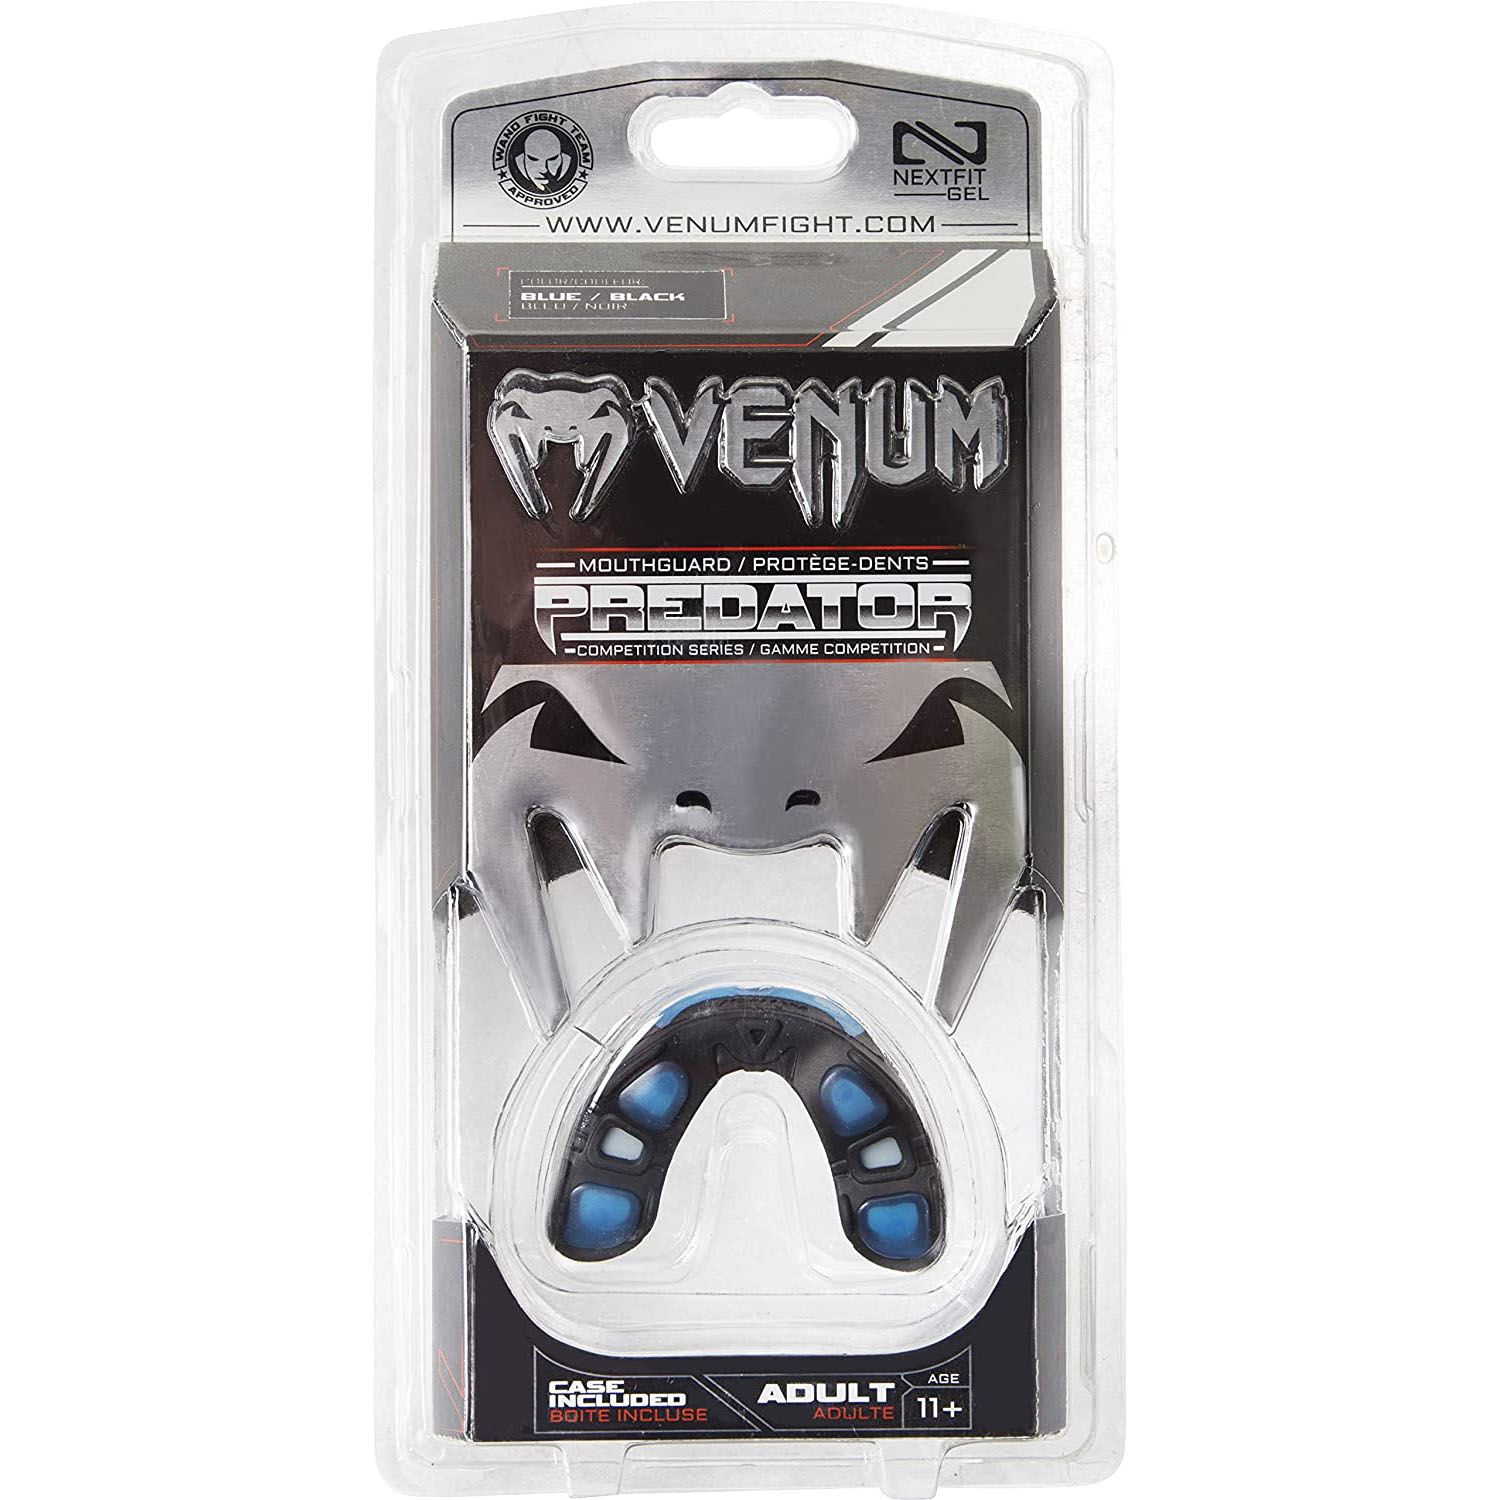 Venum Predator Mouthguard - Black/Red